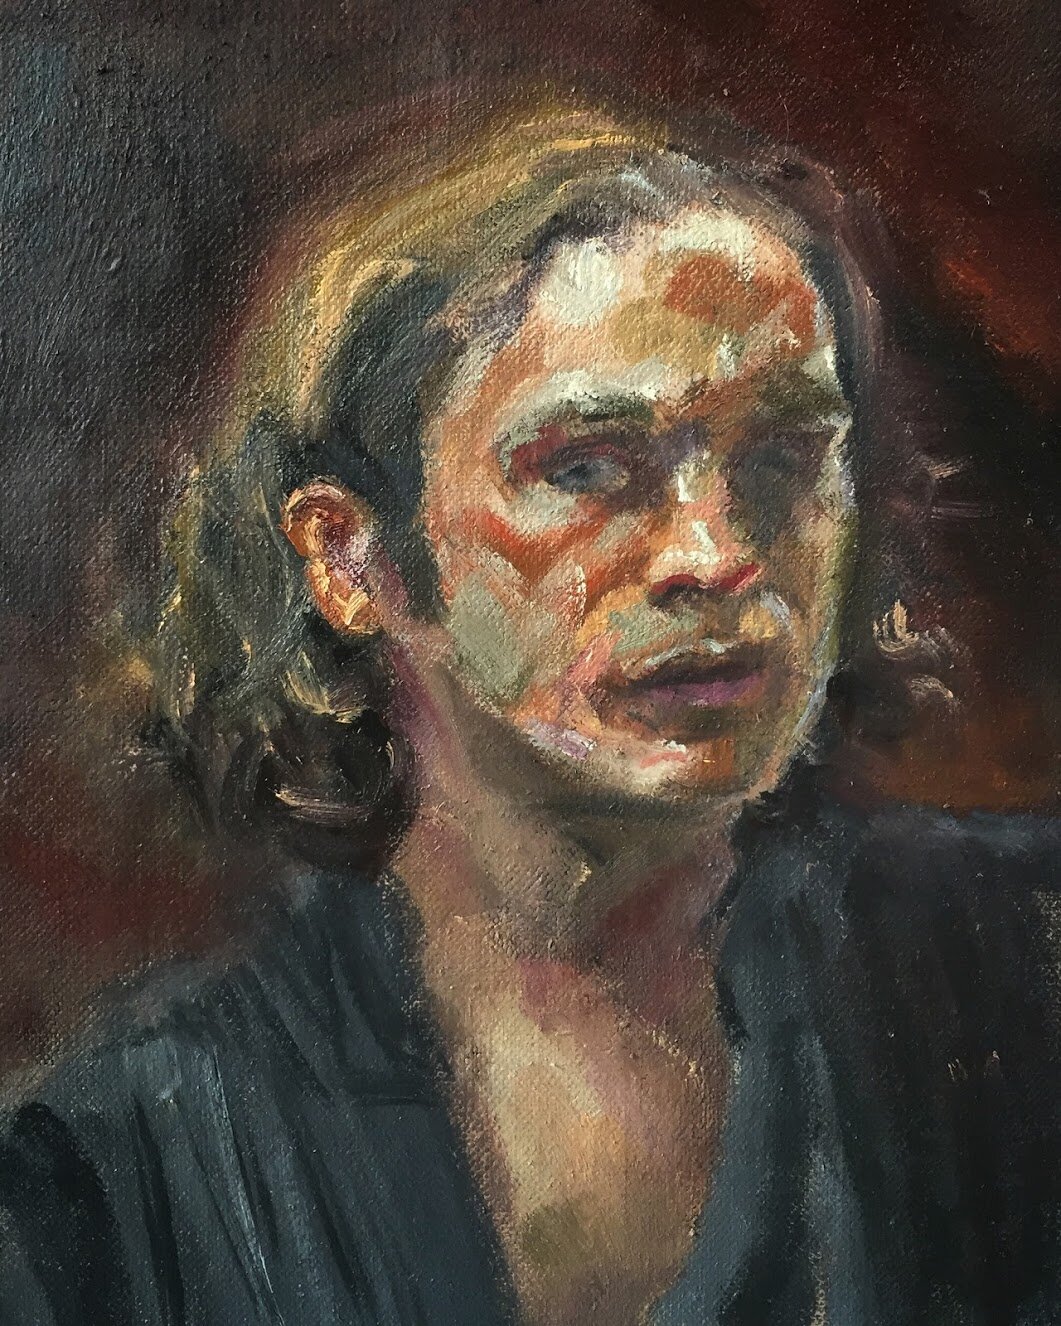  Self Portrait in Robe - 2016  